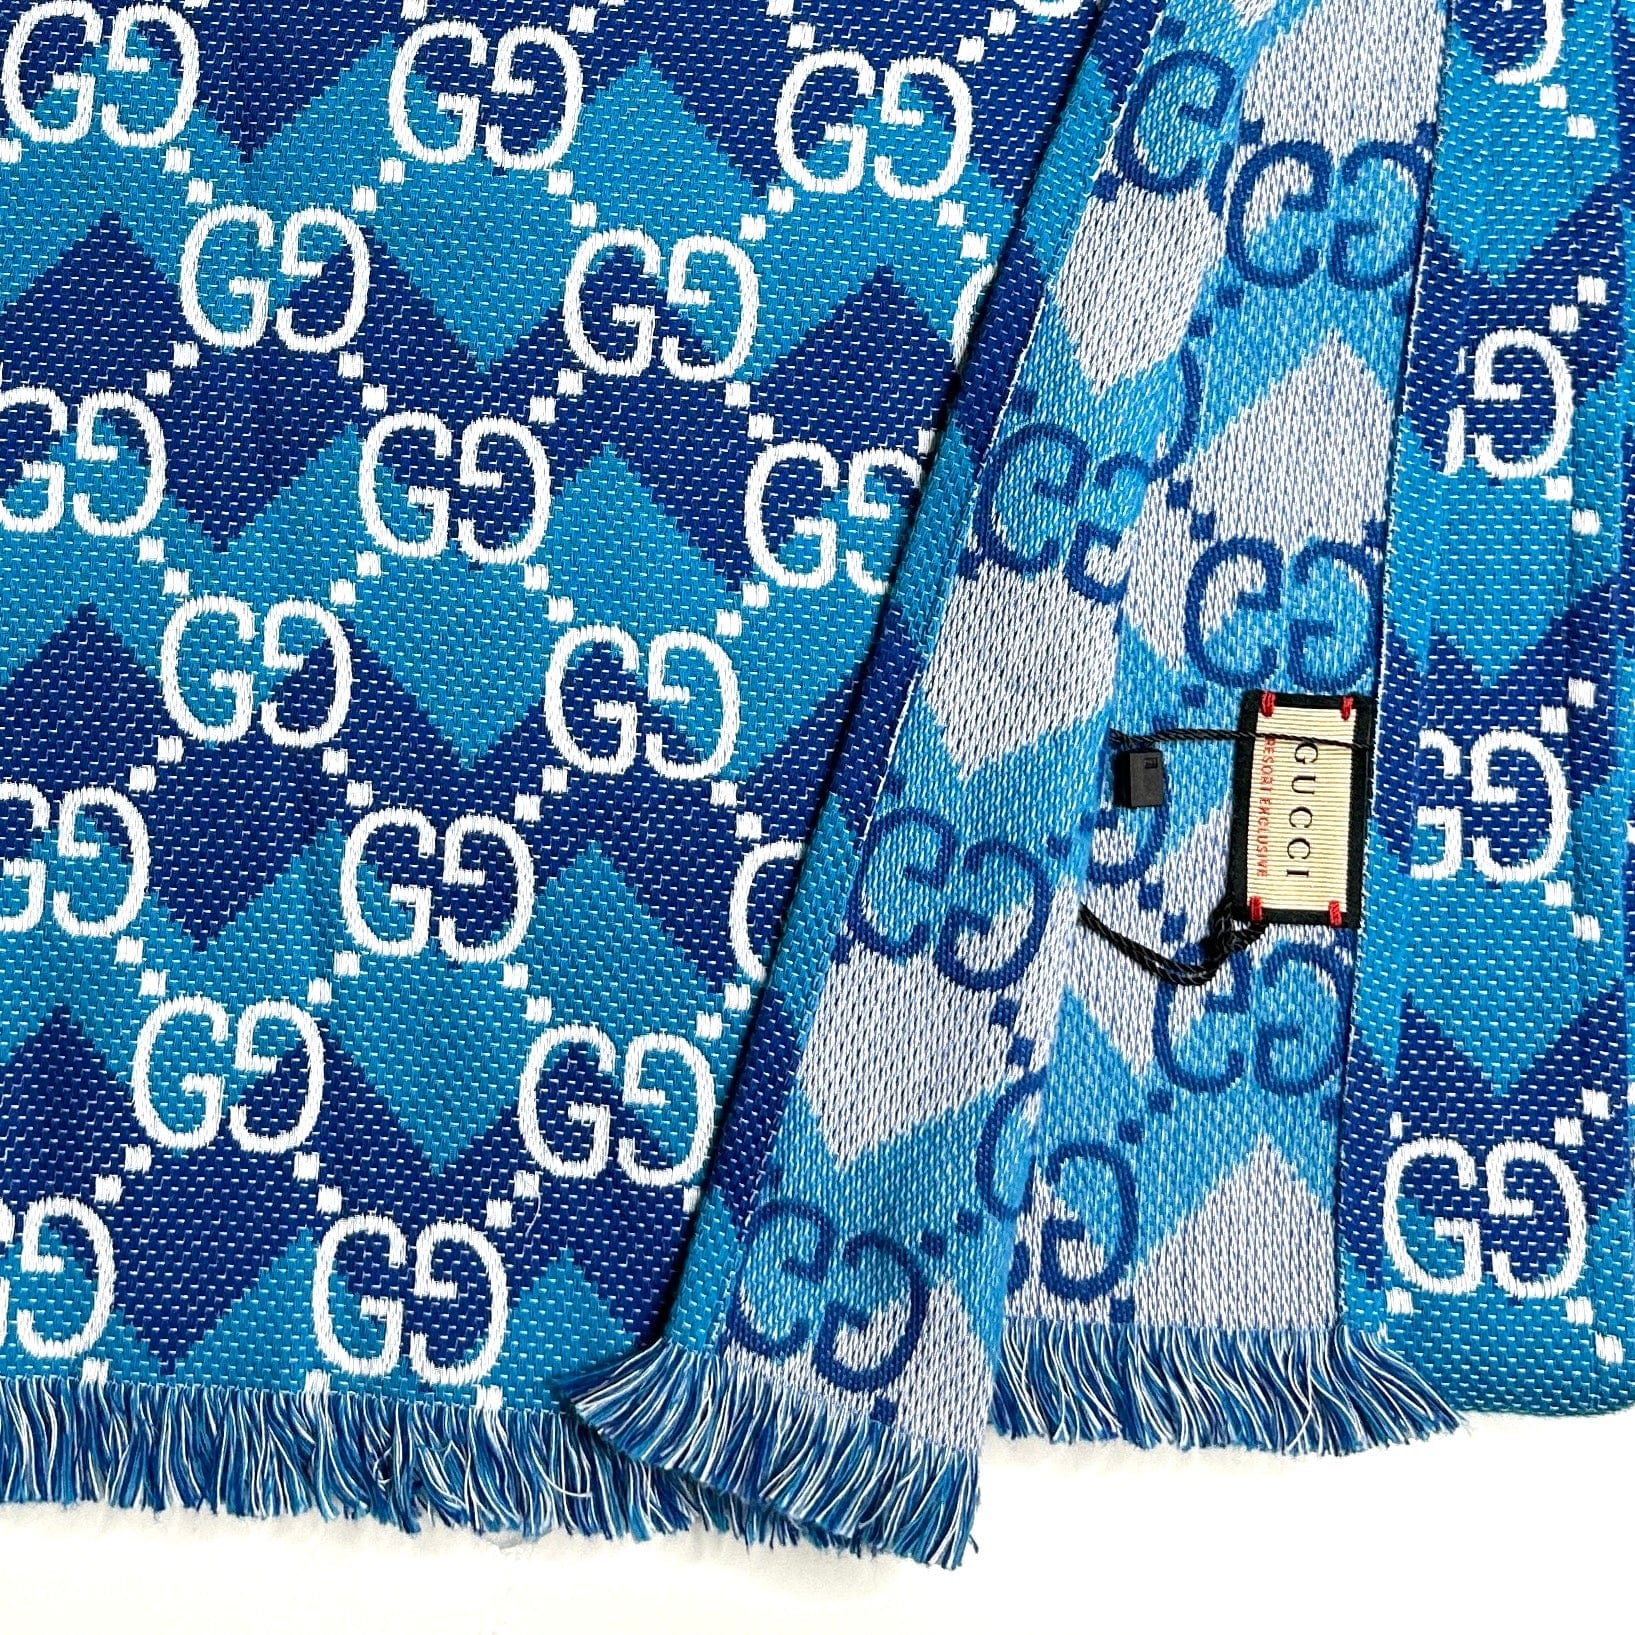 Gucci Monogram Blanket